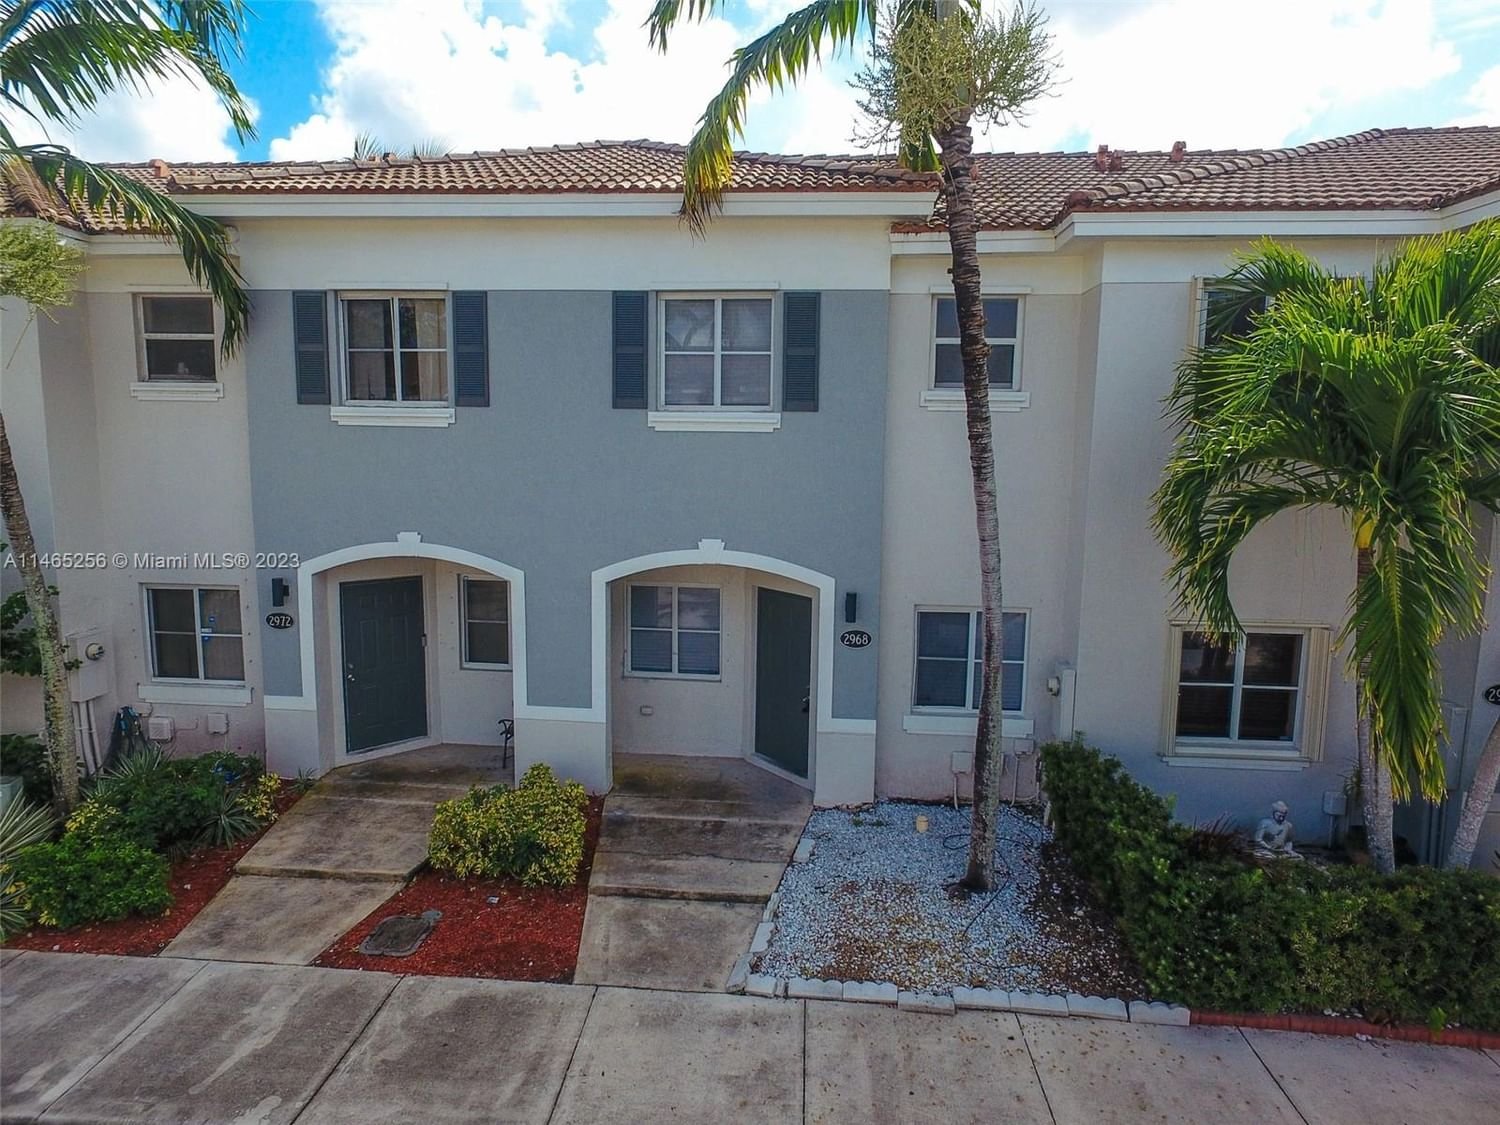 Real estate property located at 2968 15th Ter #2968, Miami-Dade County, VENETIA GROVE, Homestead, FL